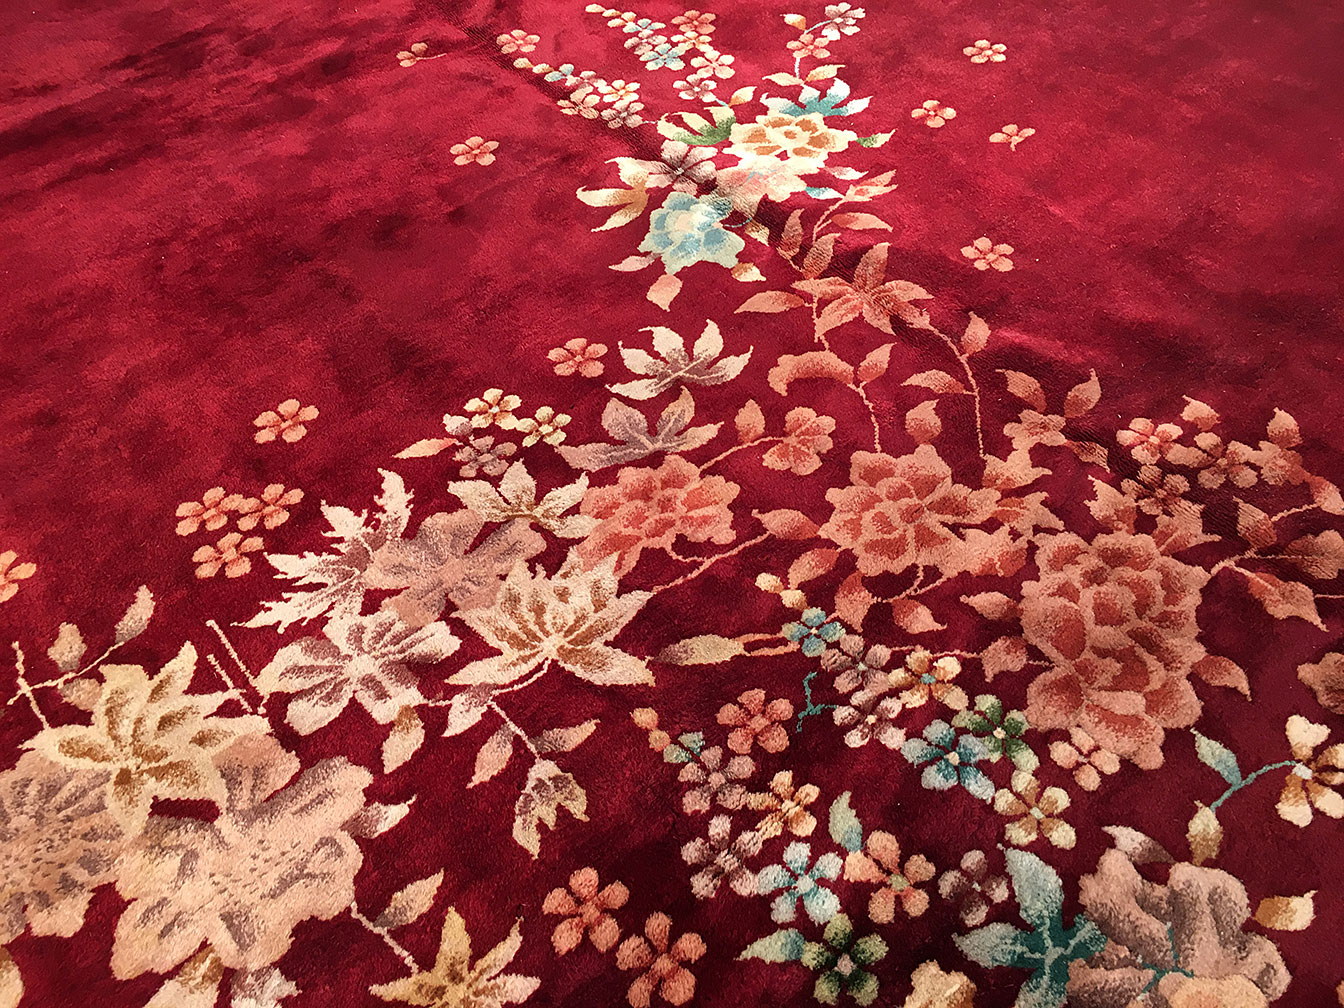 Antique chinese Carpet - # 50742